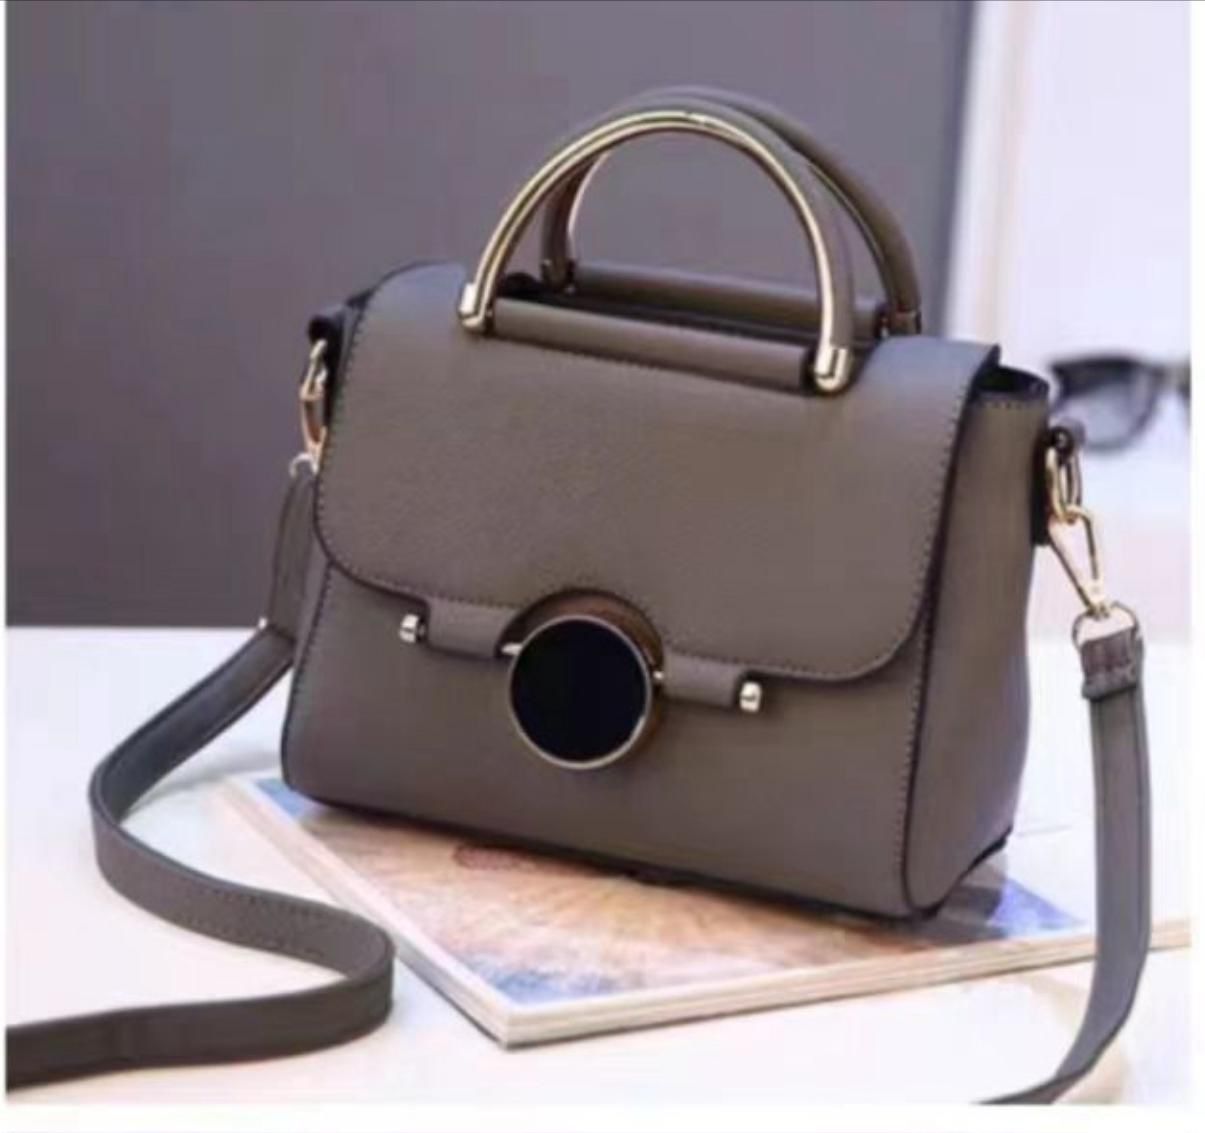 Black handbag with a circle clasp and strap